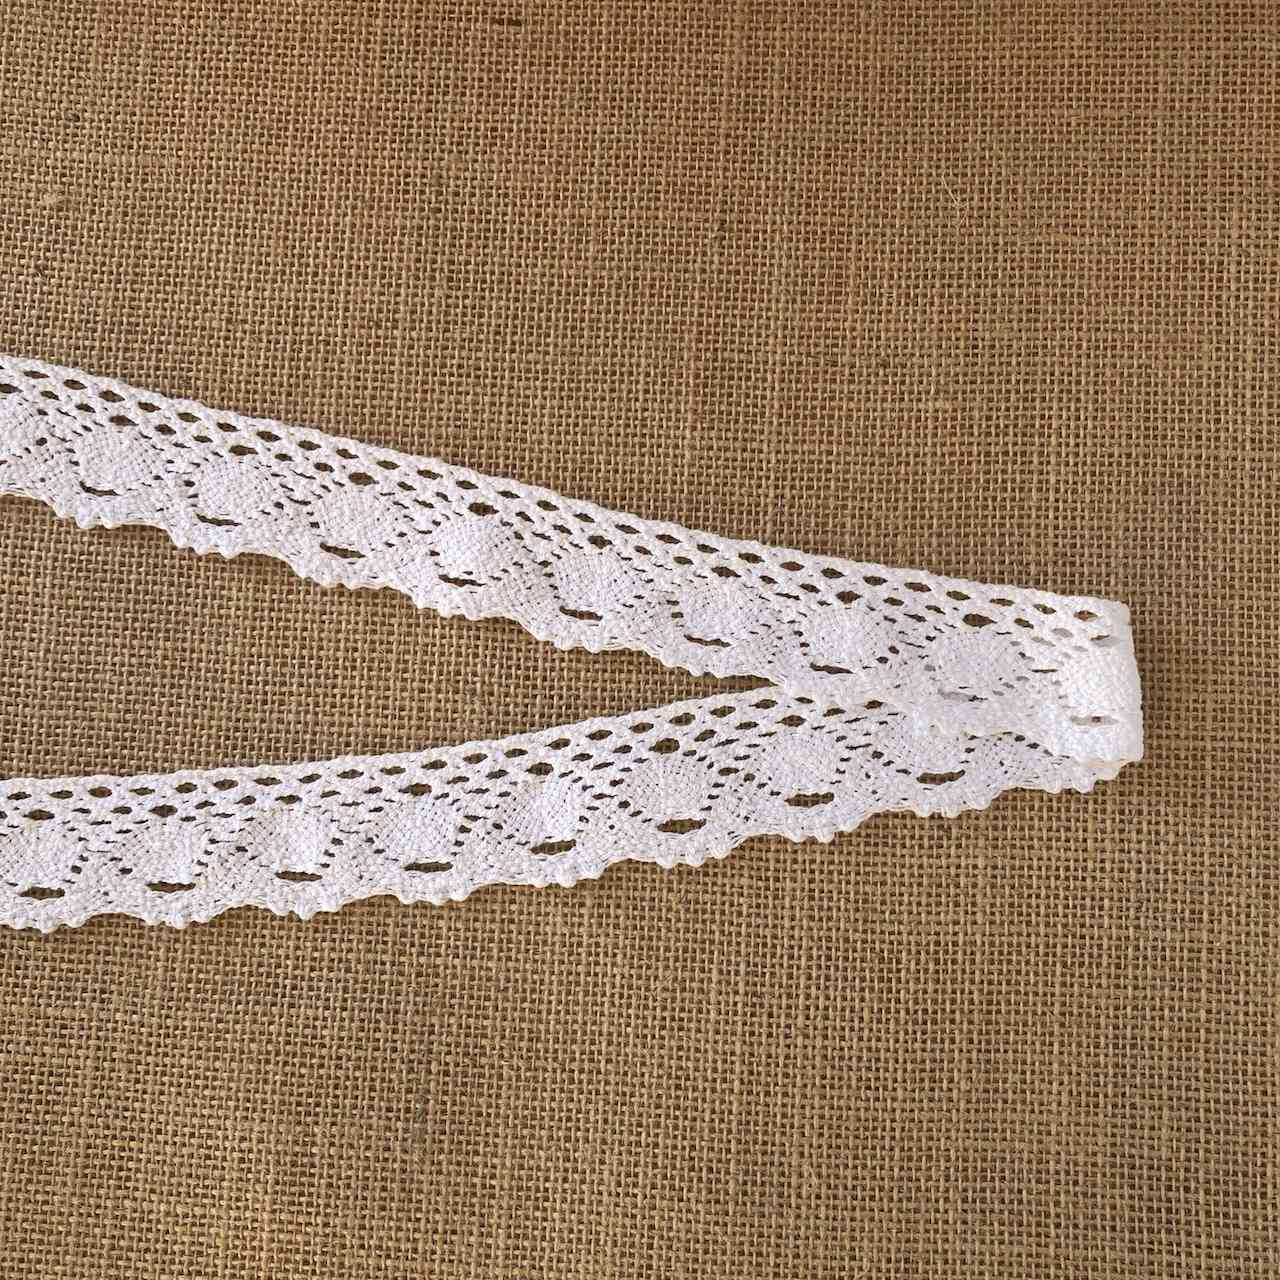 white cotton lace